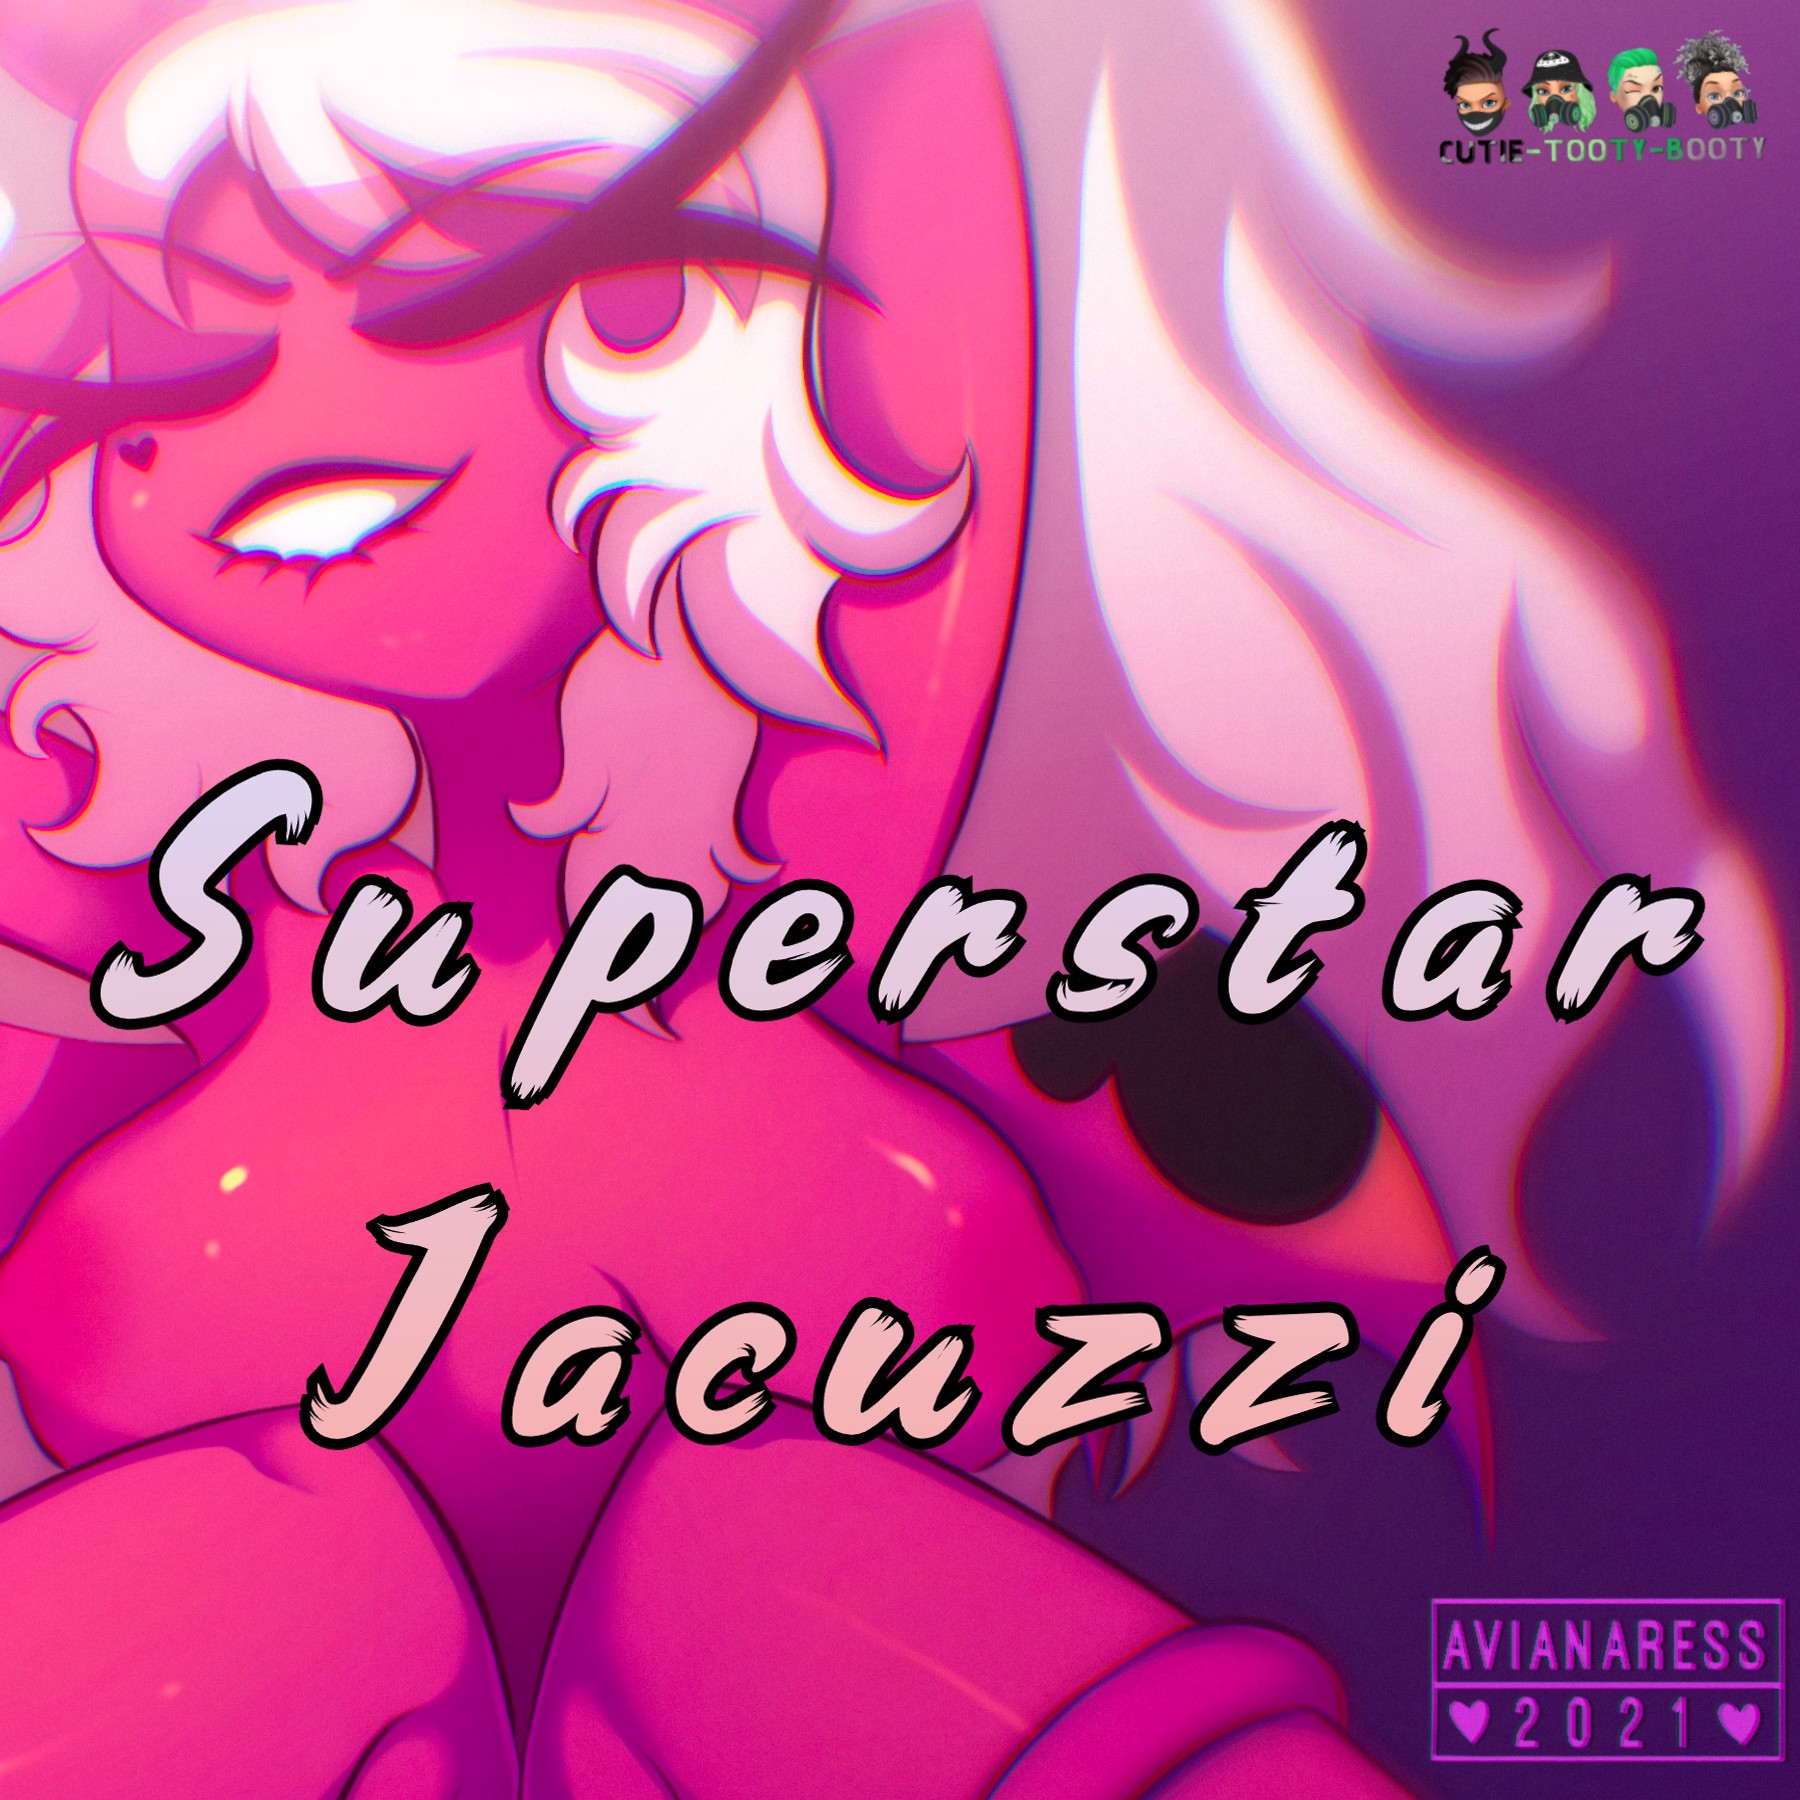 Superstar Jacuzzi